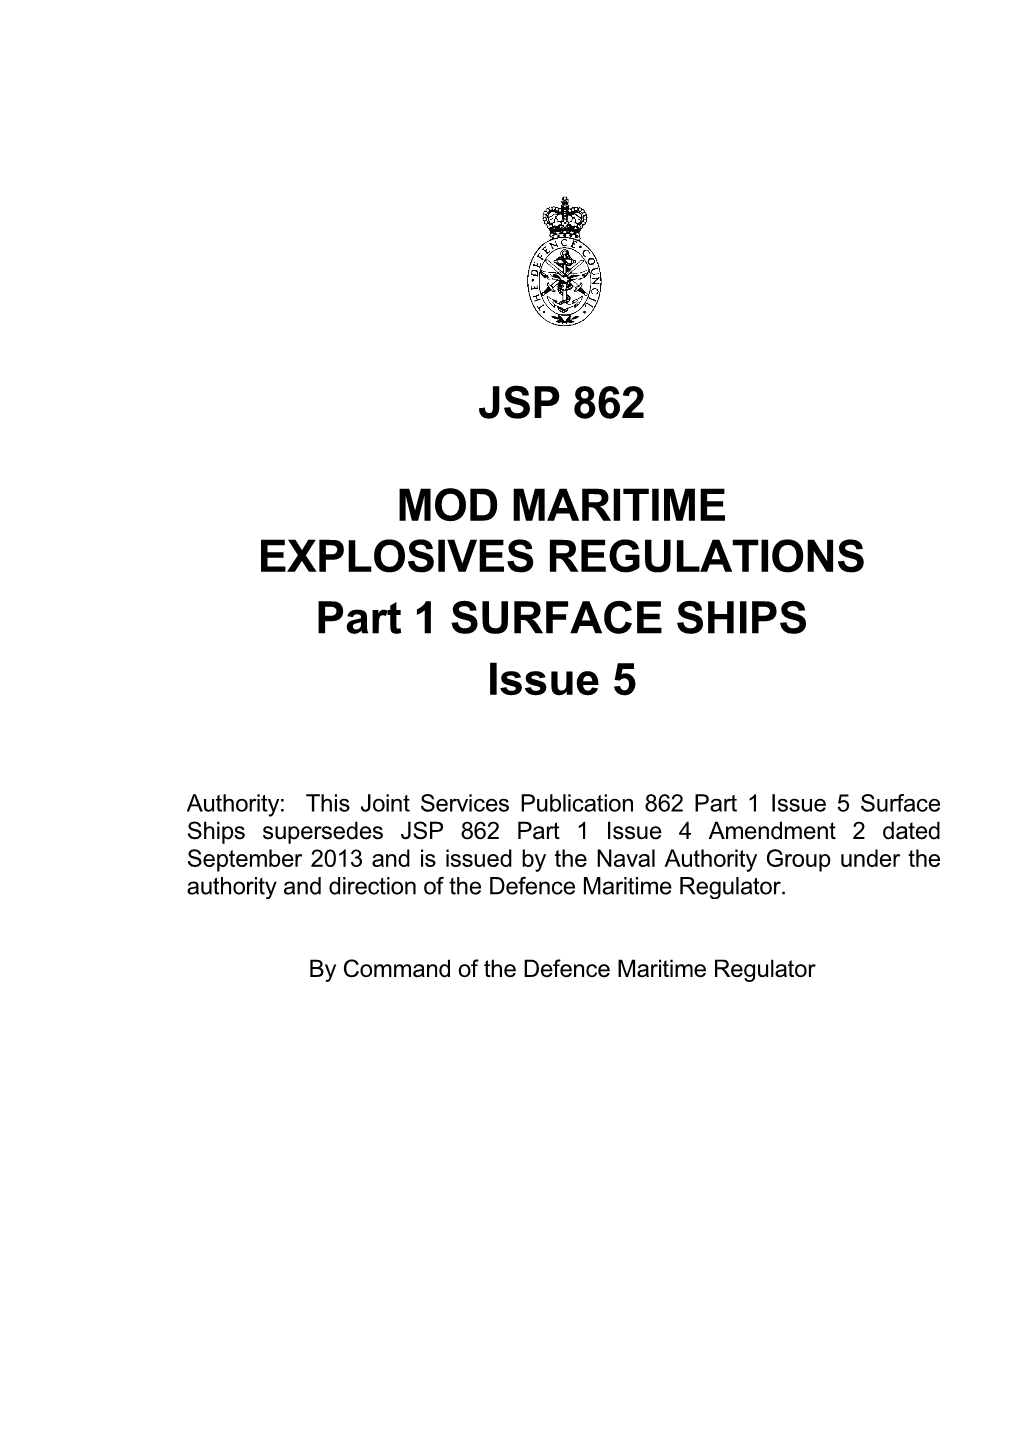 JSP 862 MOD MARITIME EXPLOSIVES REGULATIONS Part 1 SURFACE SHIPS Issue 5